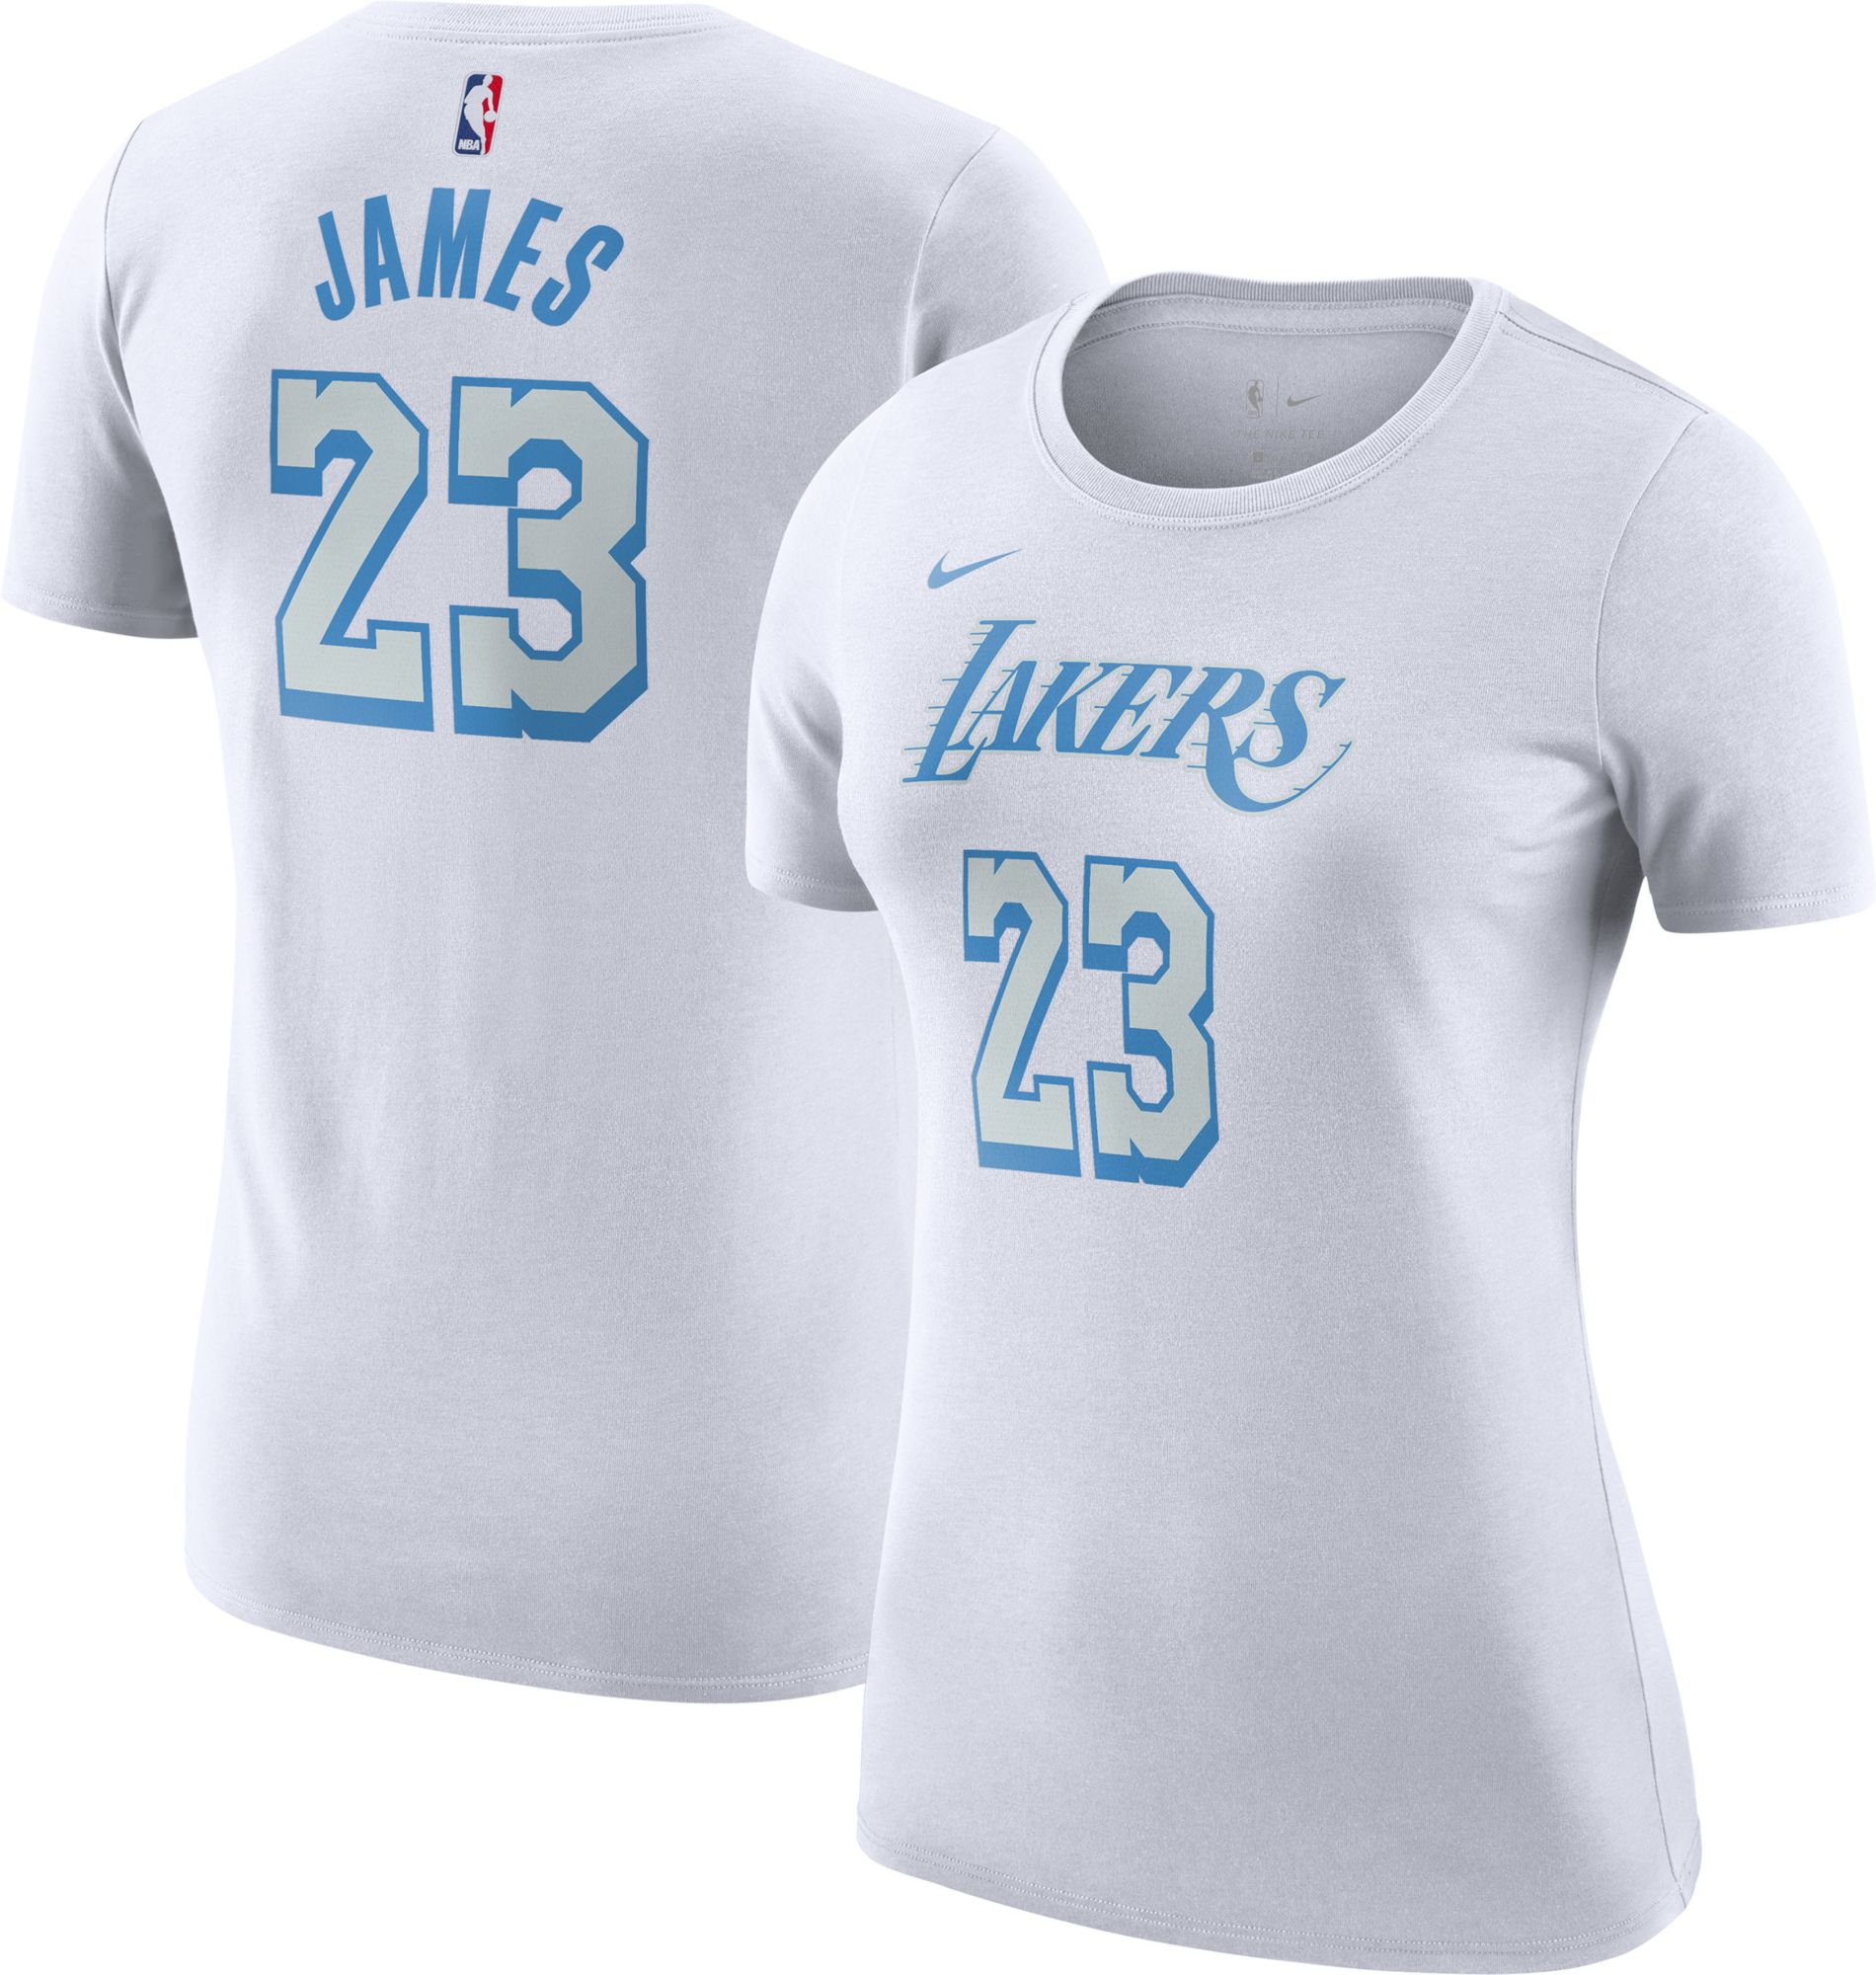 lebron james women's jersey